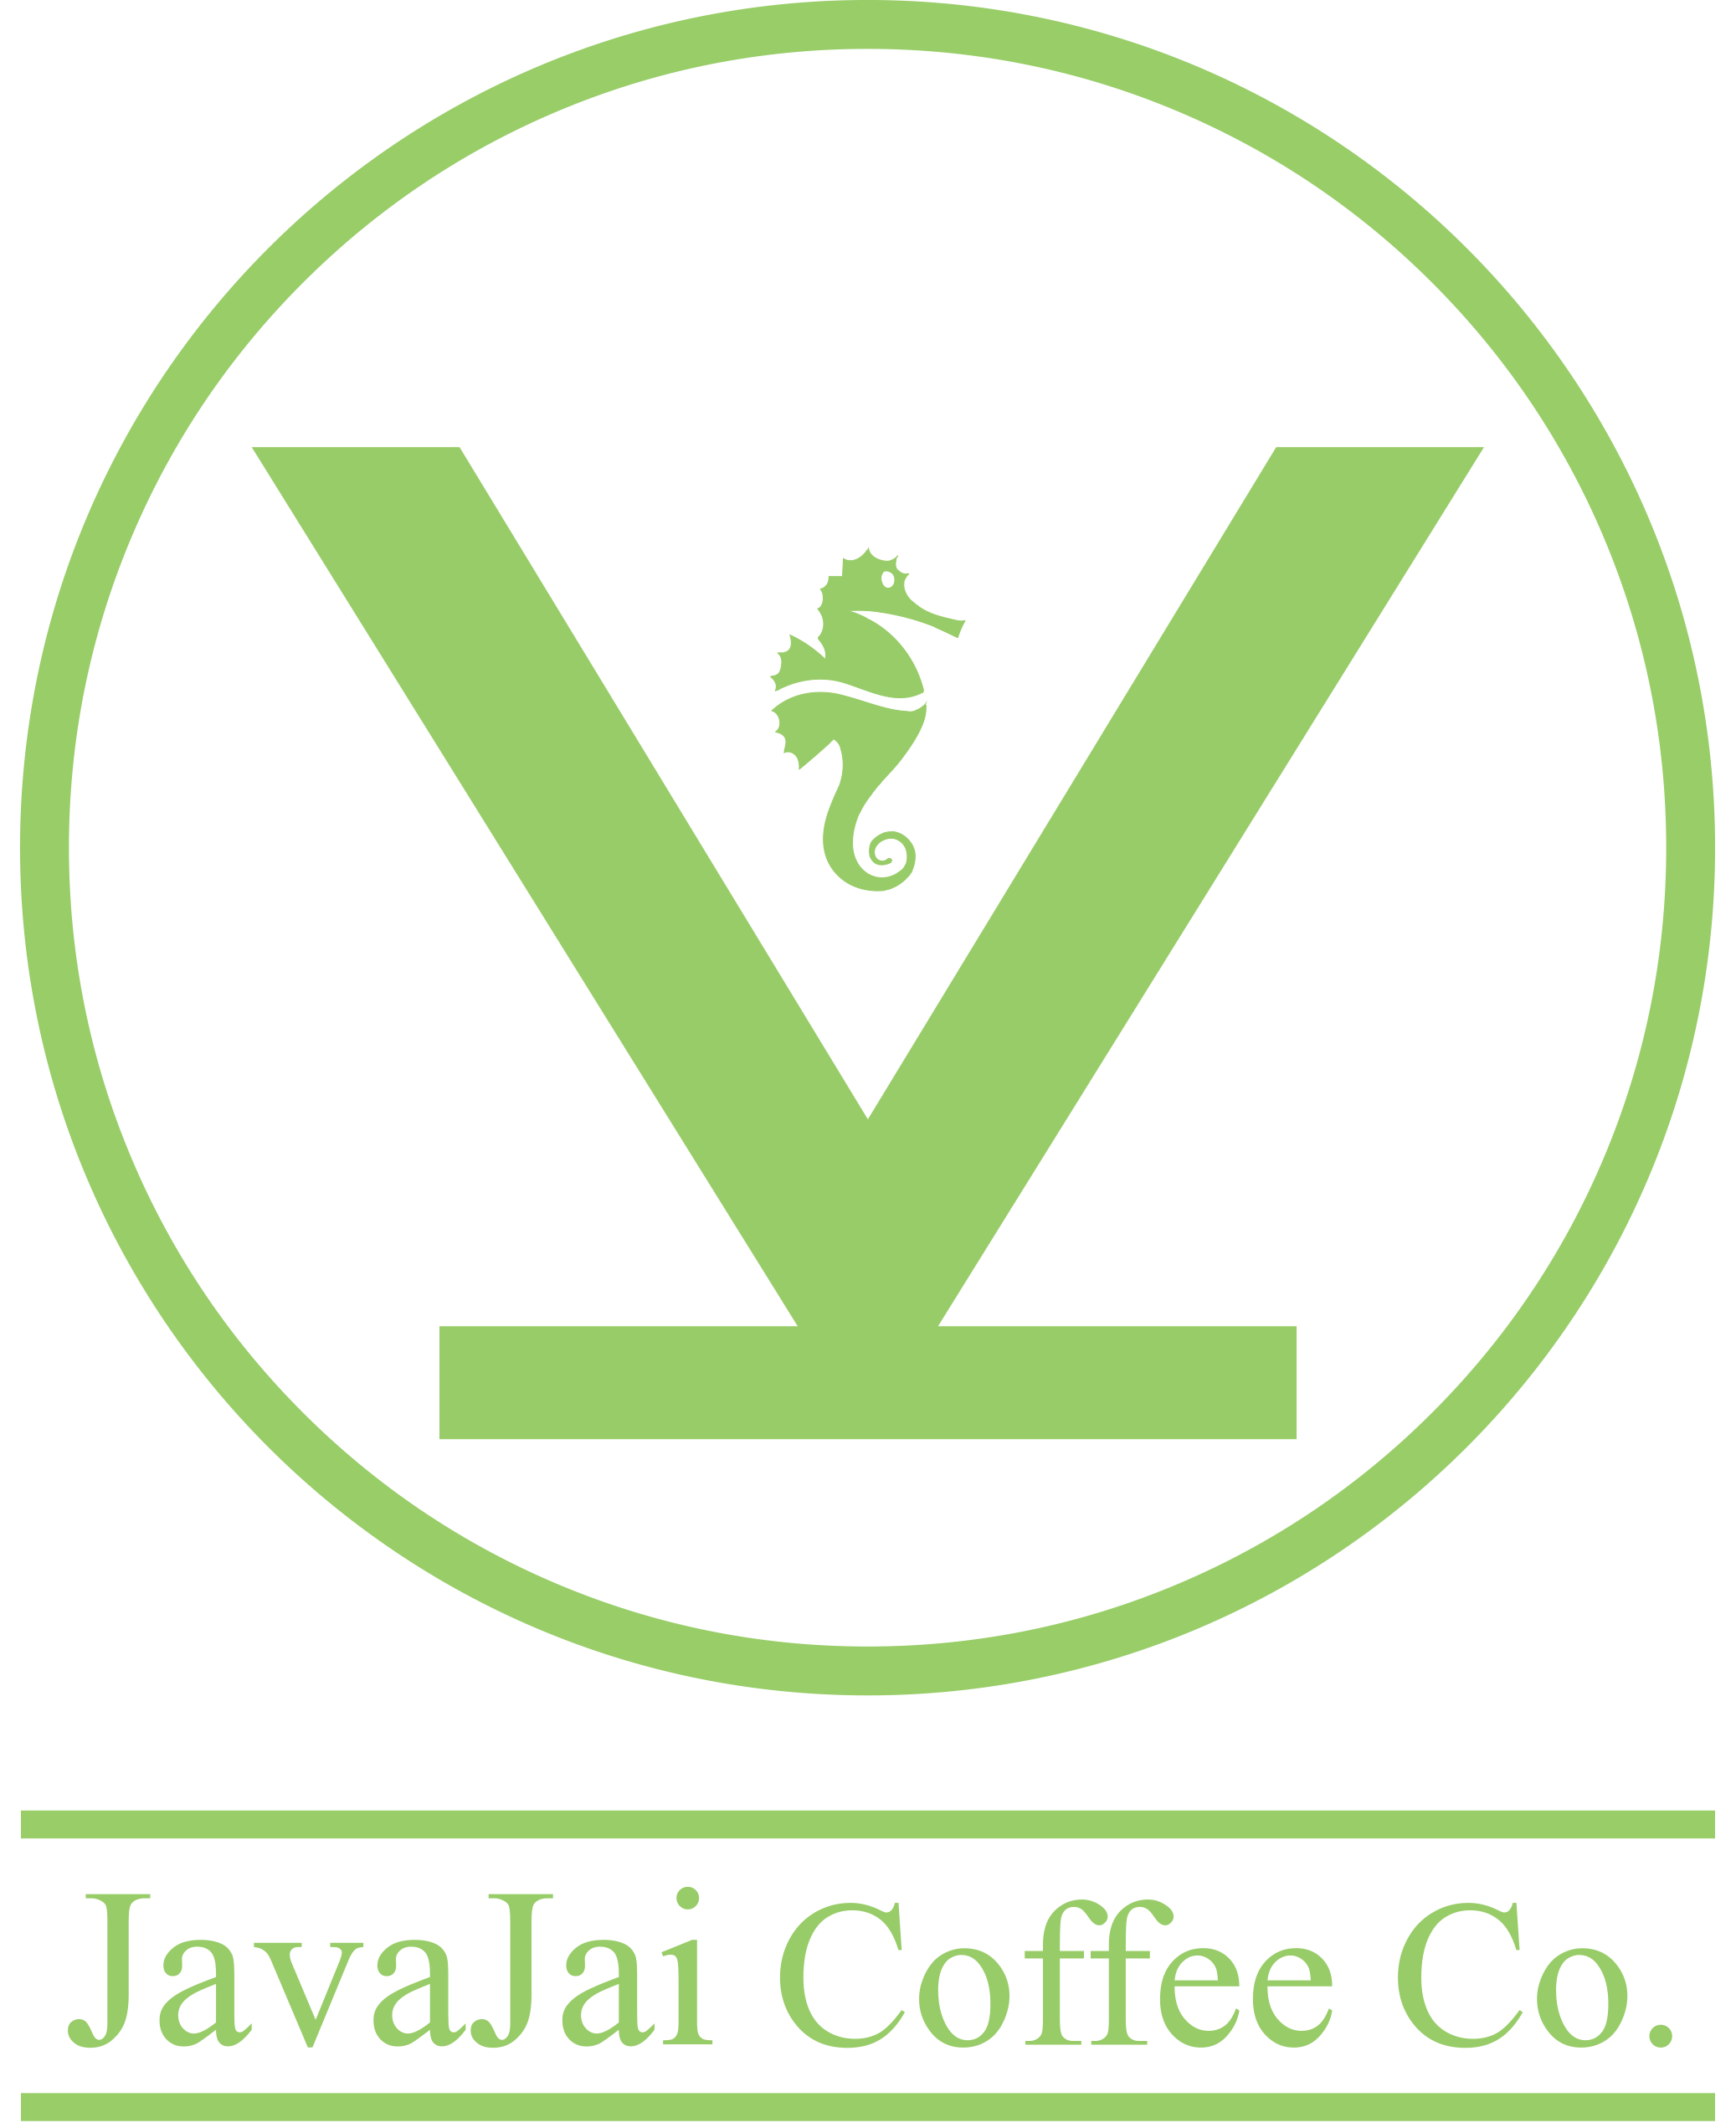 JavaJai Logo Green.png